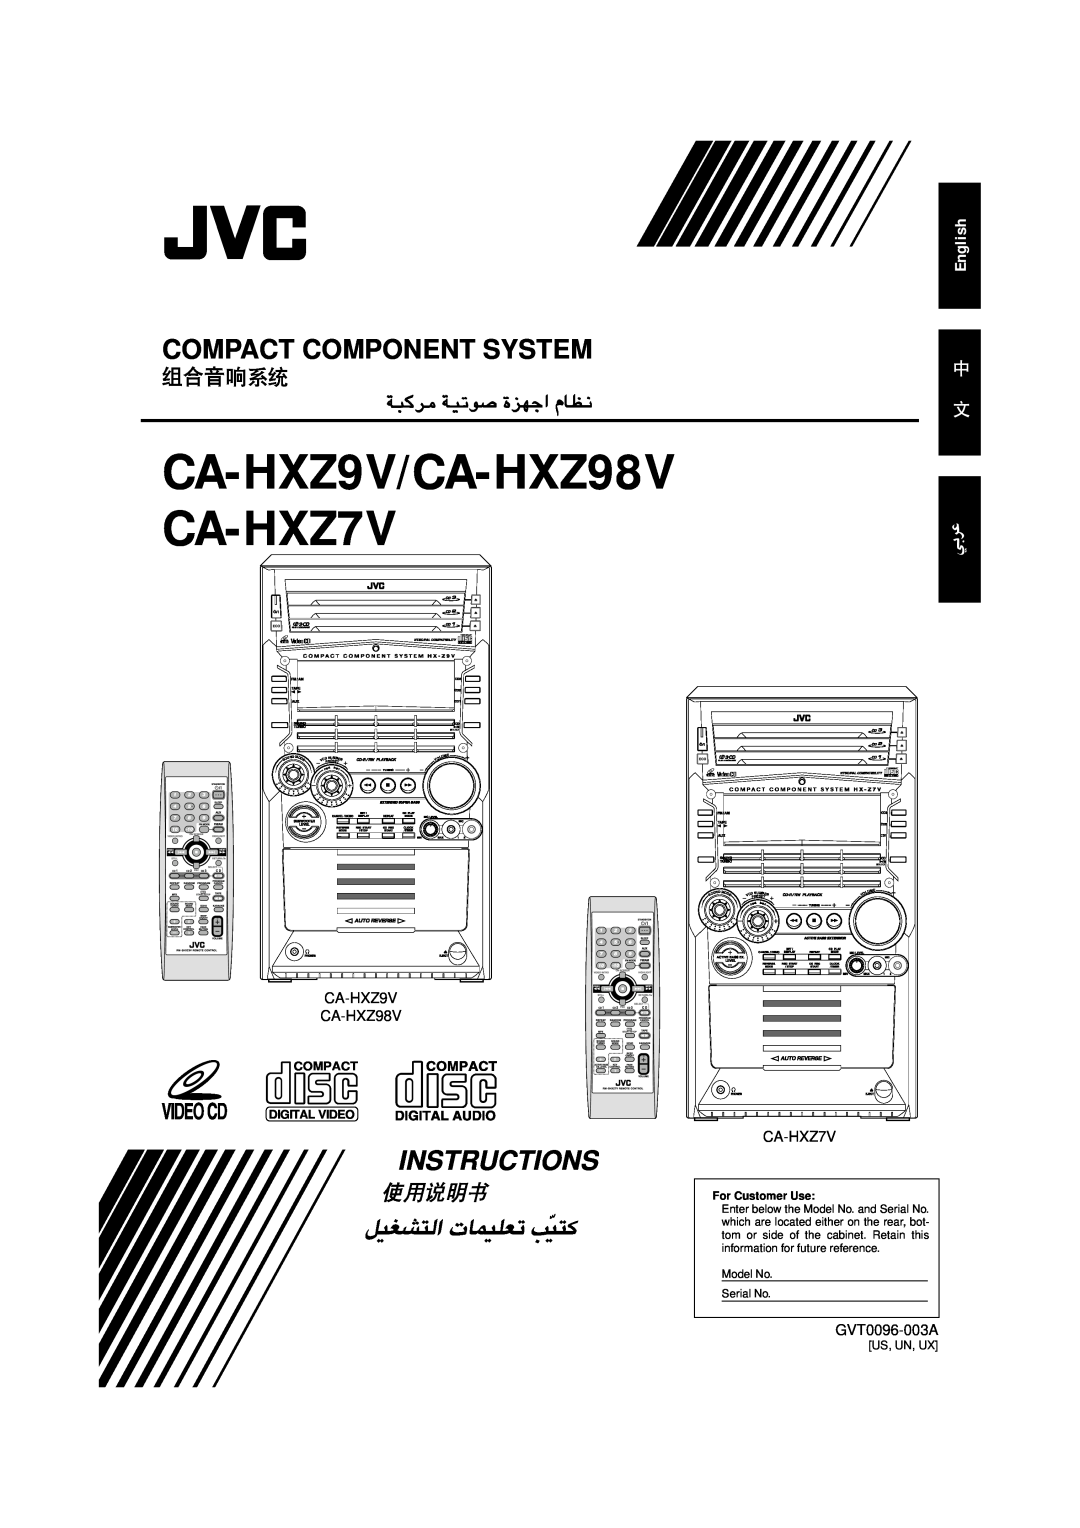 JVC manual English, CA-HXZ9V/CA-HXZ98V CA-HXZ7V, Compact Component System, Instructions, CA-HXZ9V CA-HXZ98V, Mode, Soun 